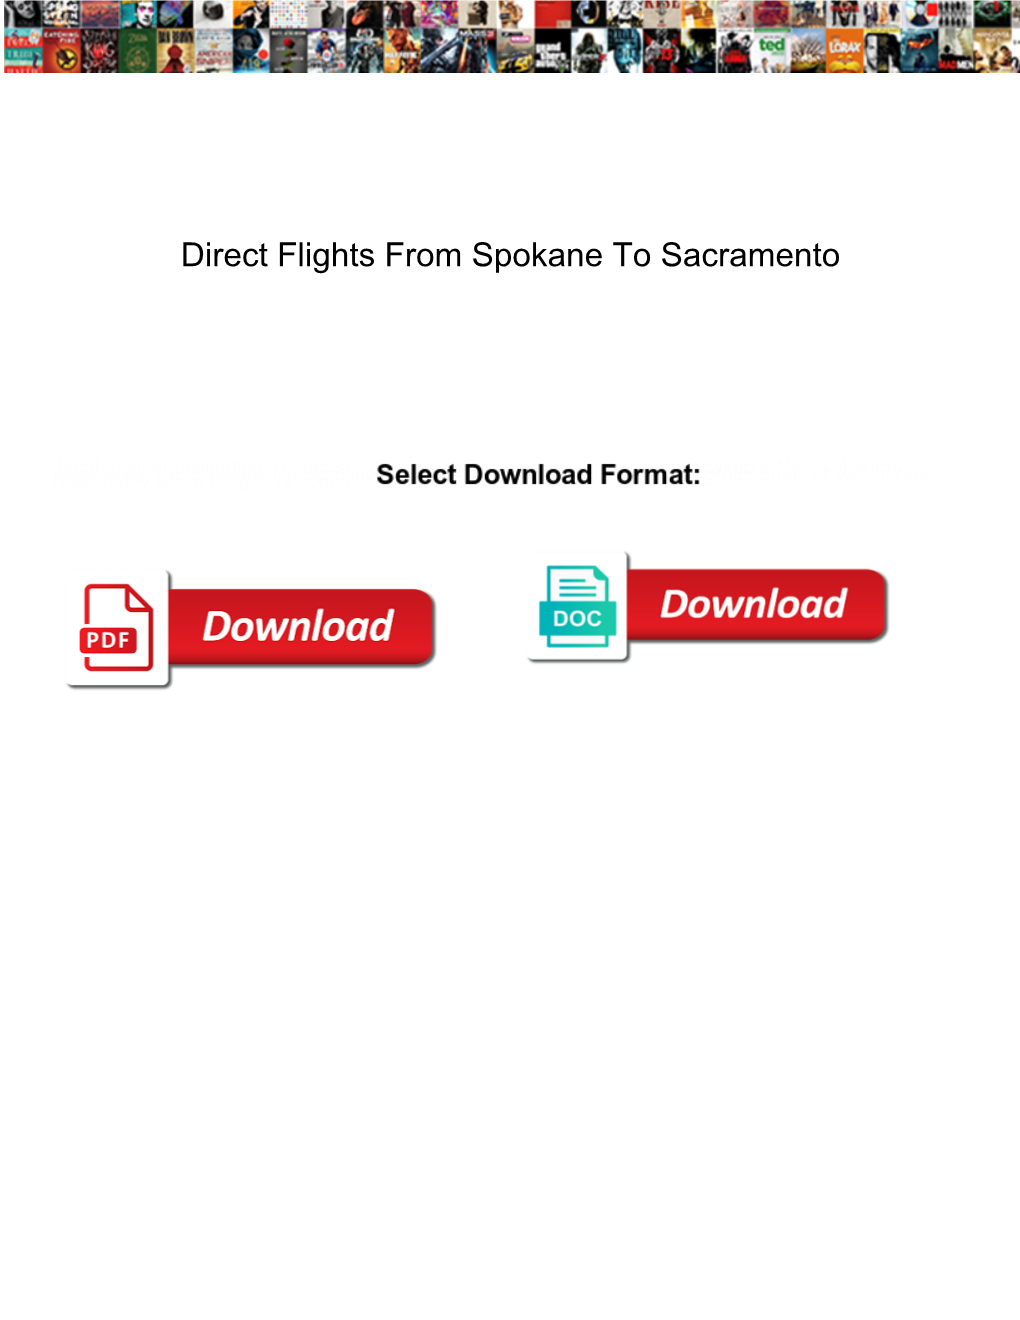 Direct Flights from Spokane to Sacramento